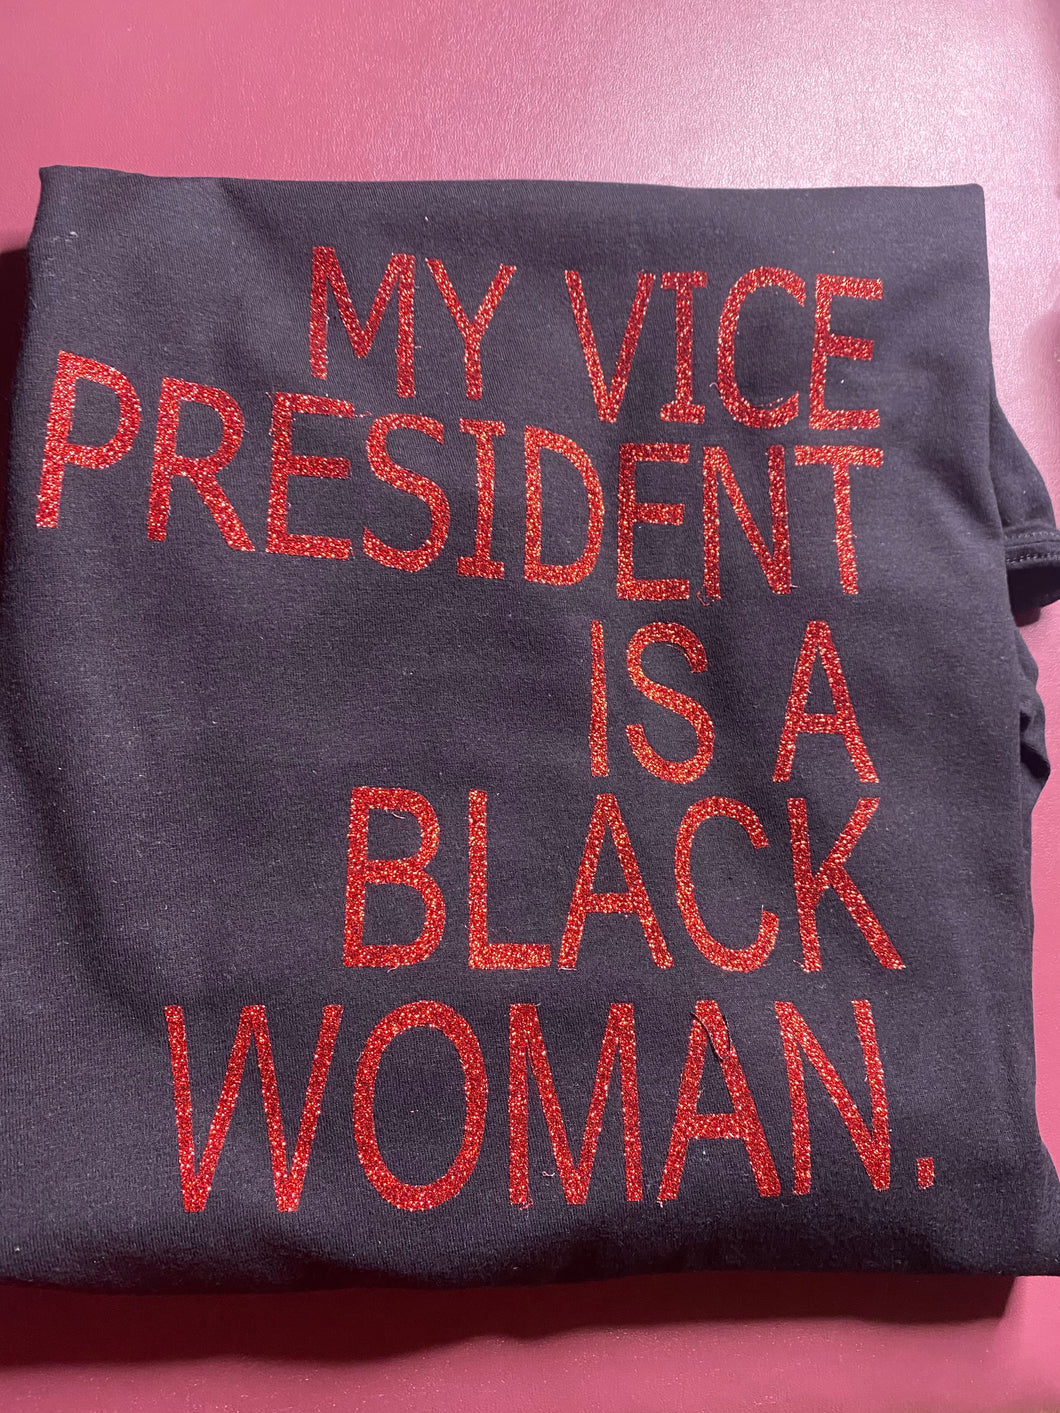 My Vice President is Black